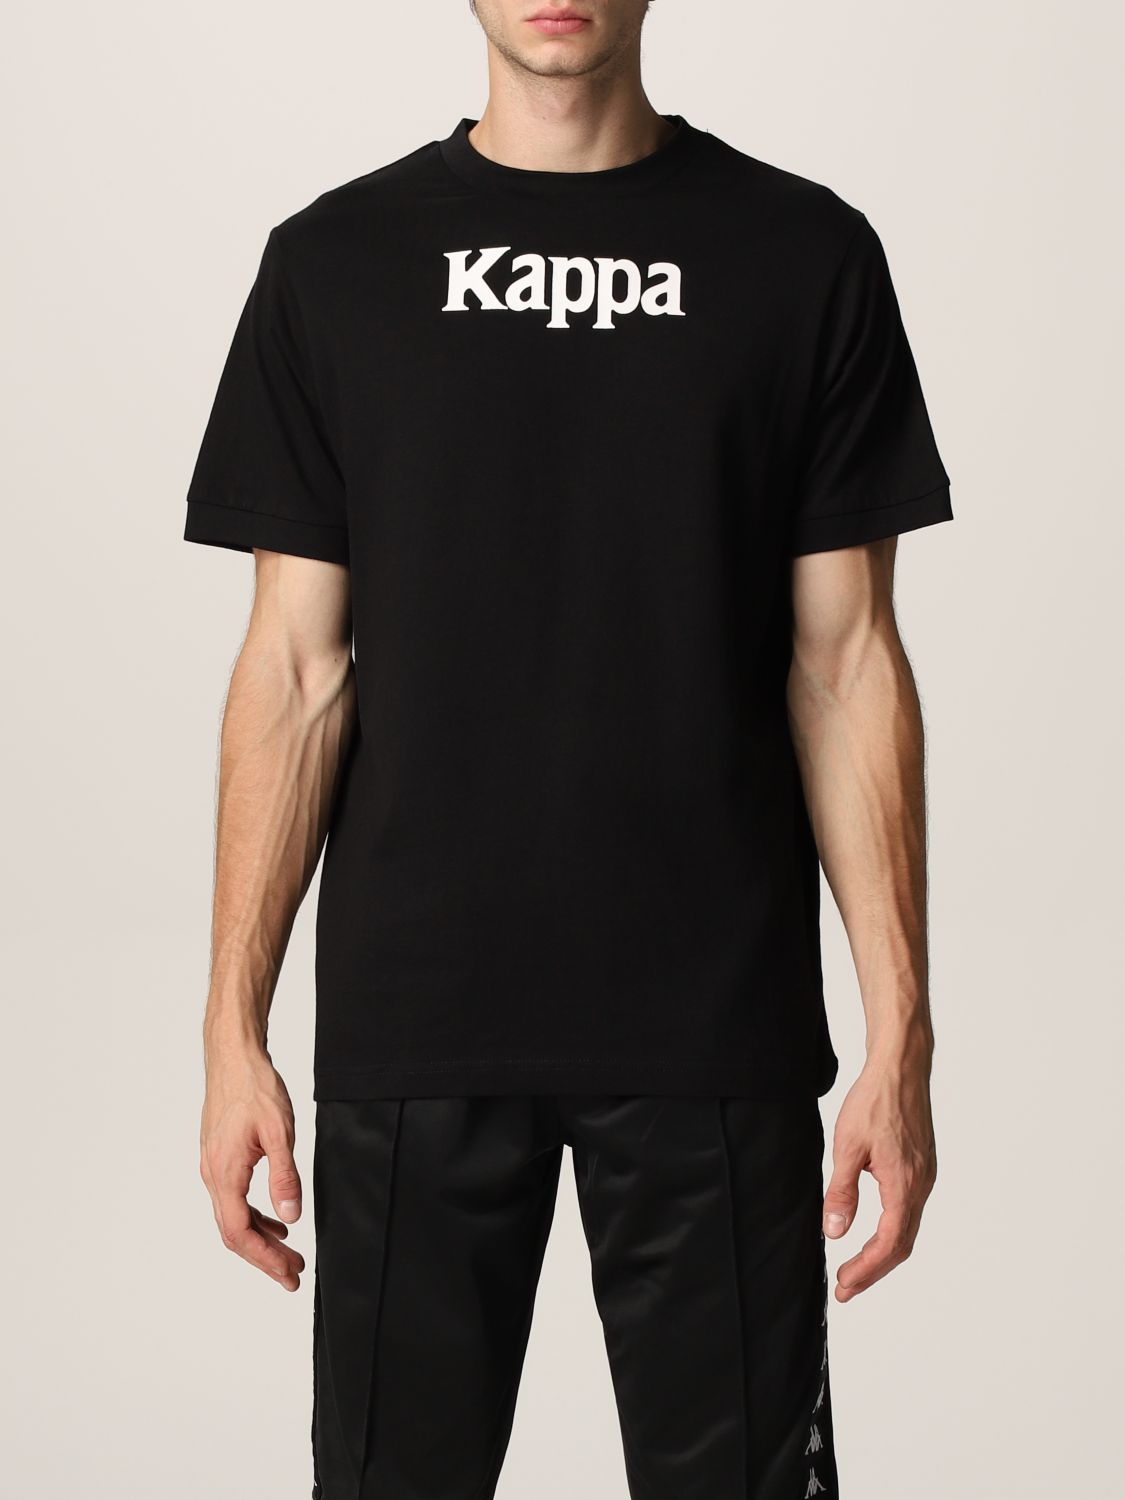 kappa logo t shirt